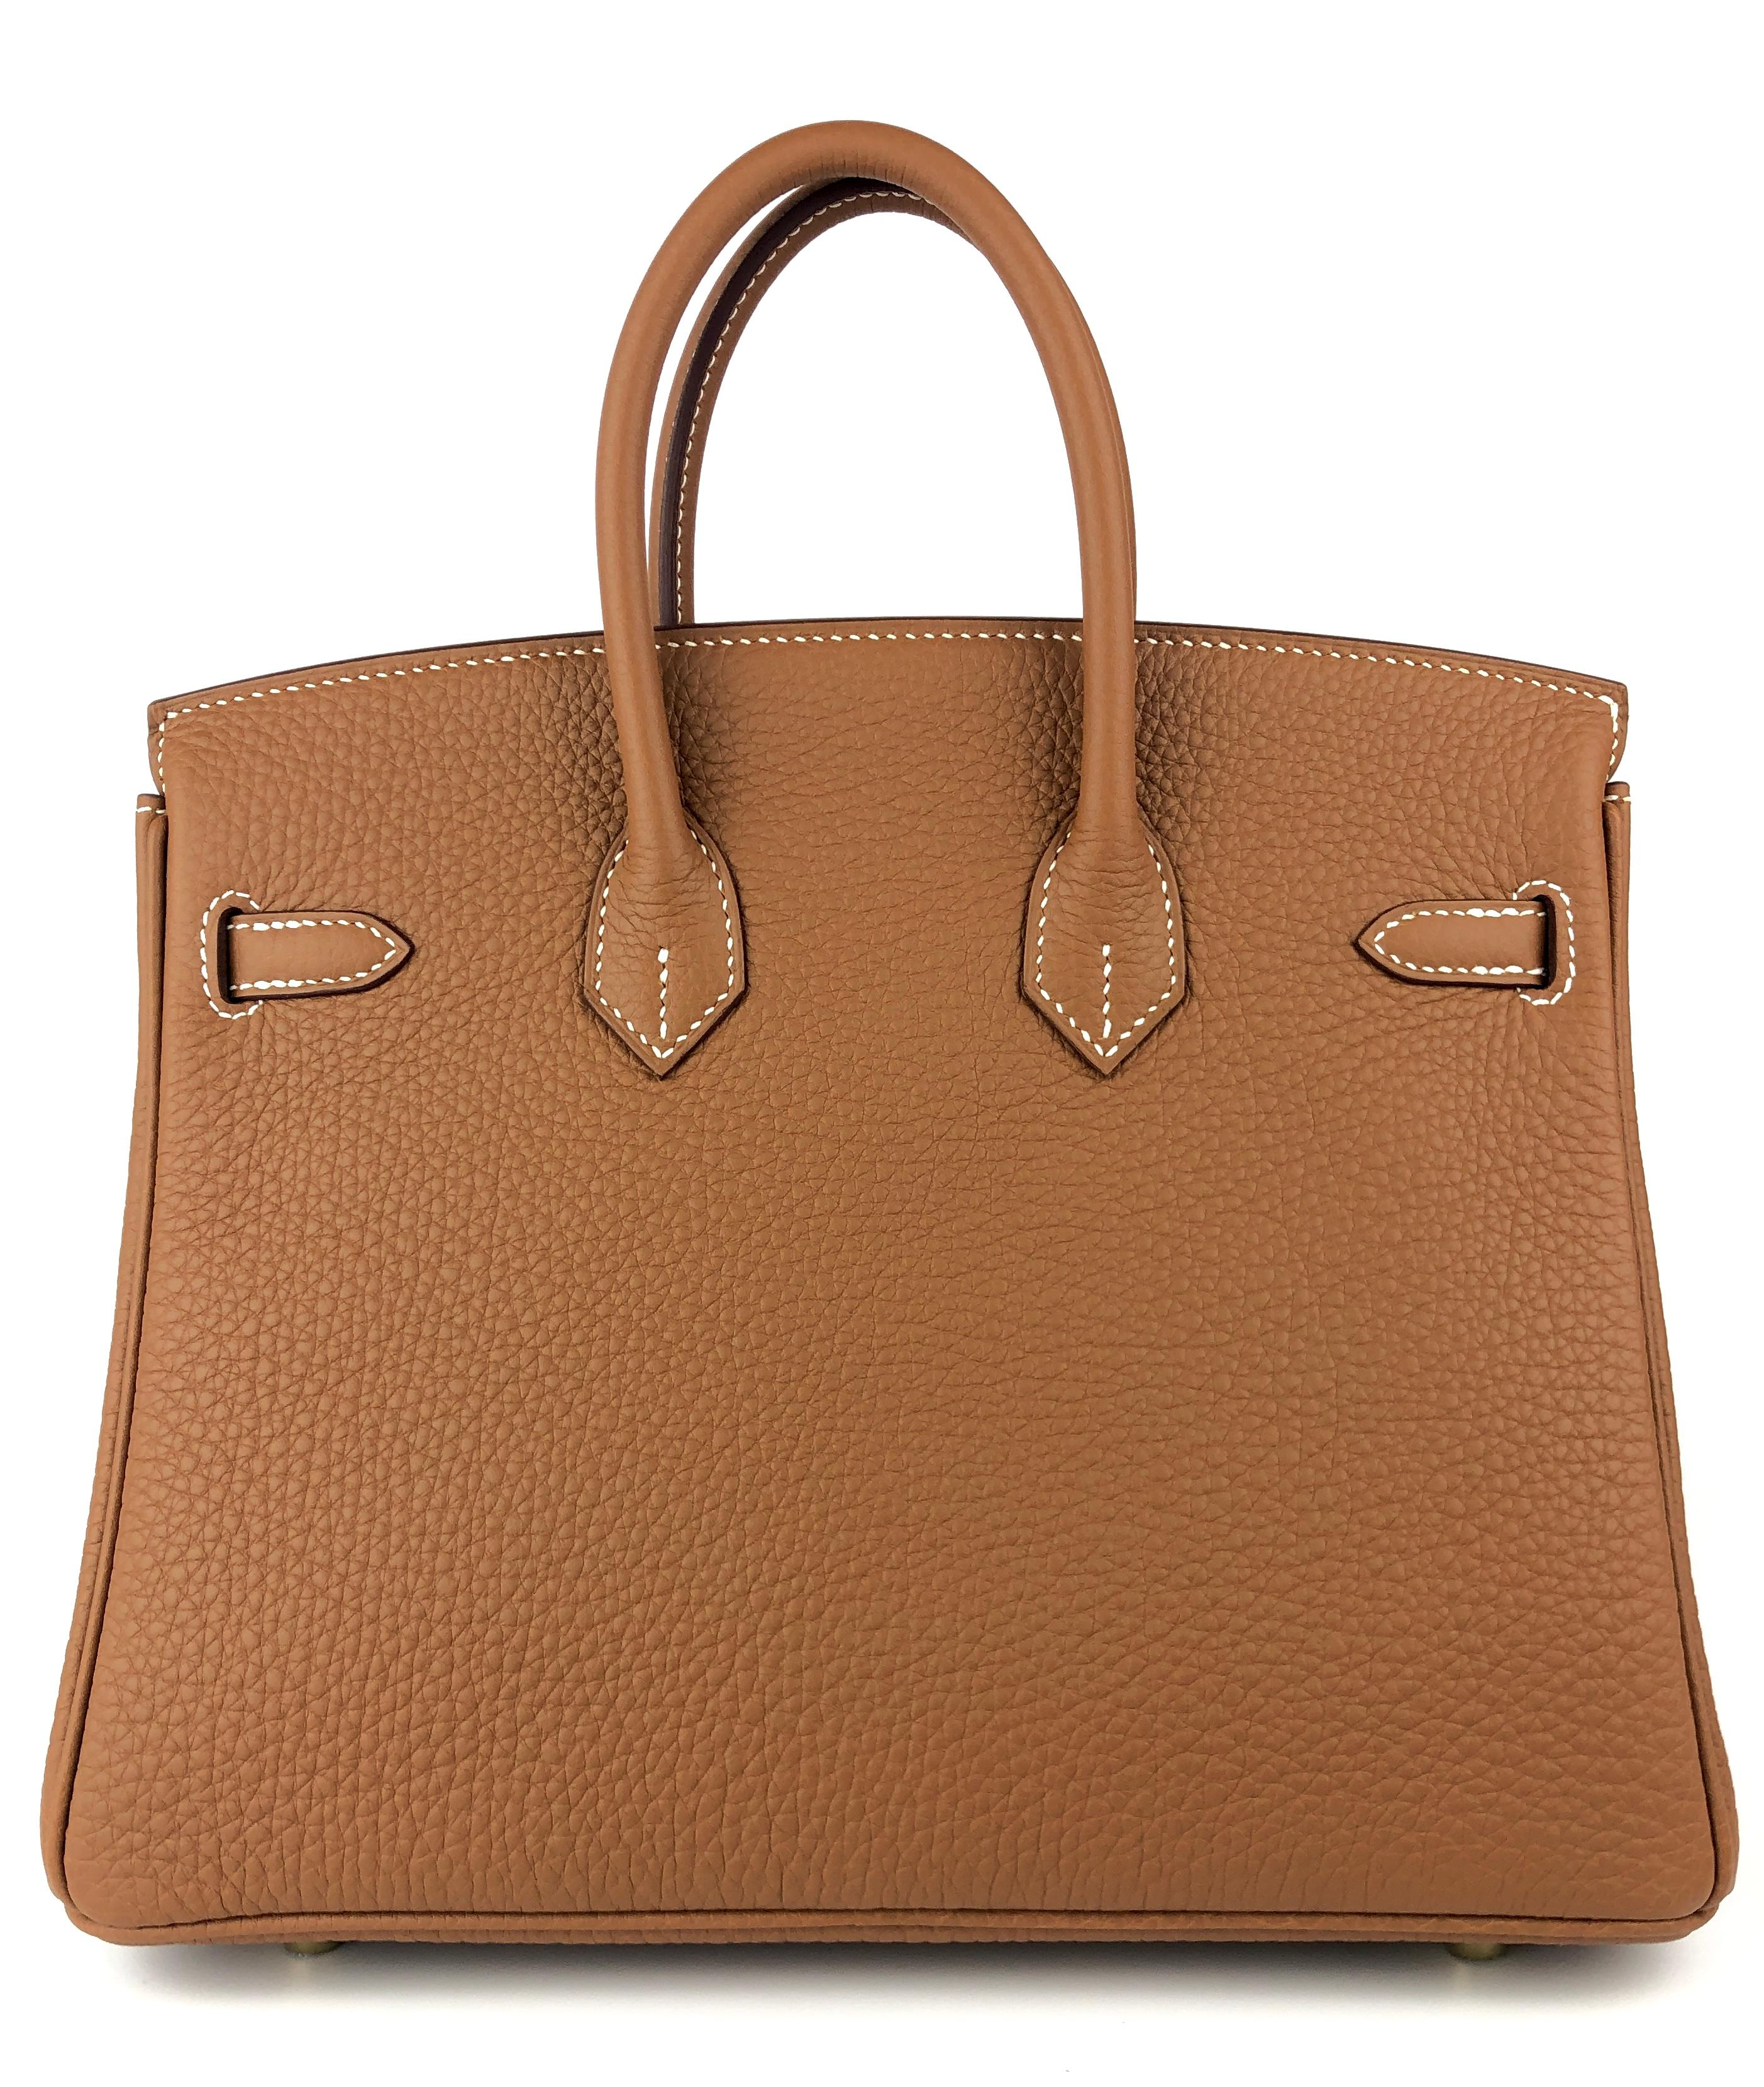 Hermes Birkin 25 Gold Tan Togo Leather Handbag Gold Hardware  In New Condition For Sale In Miami, FL